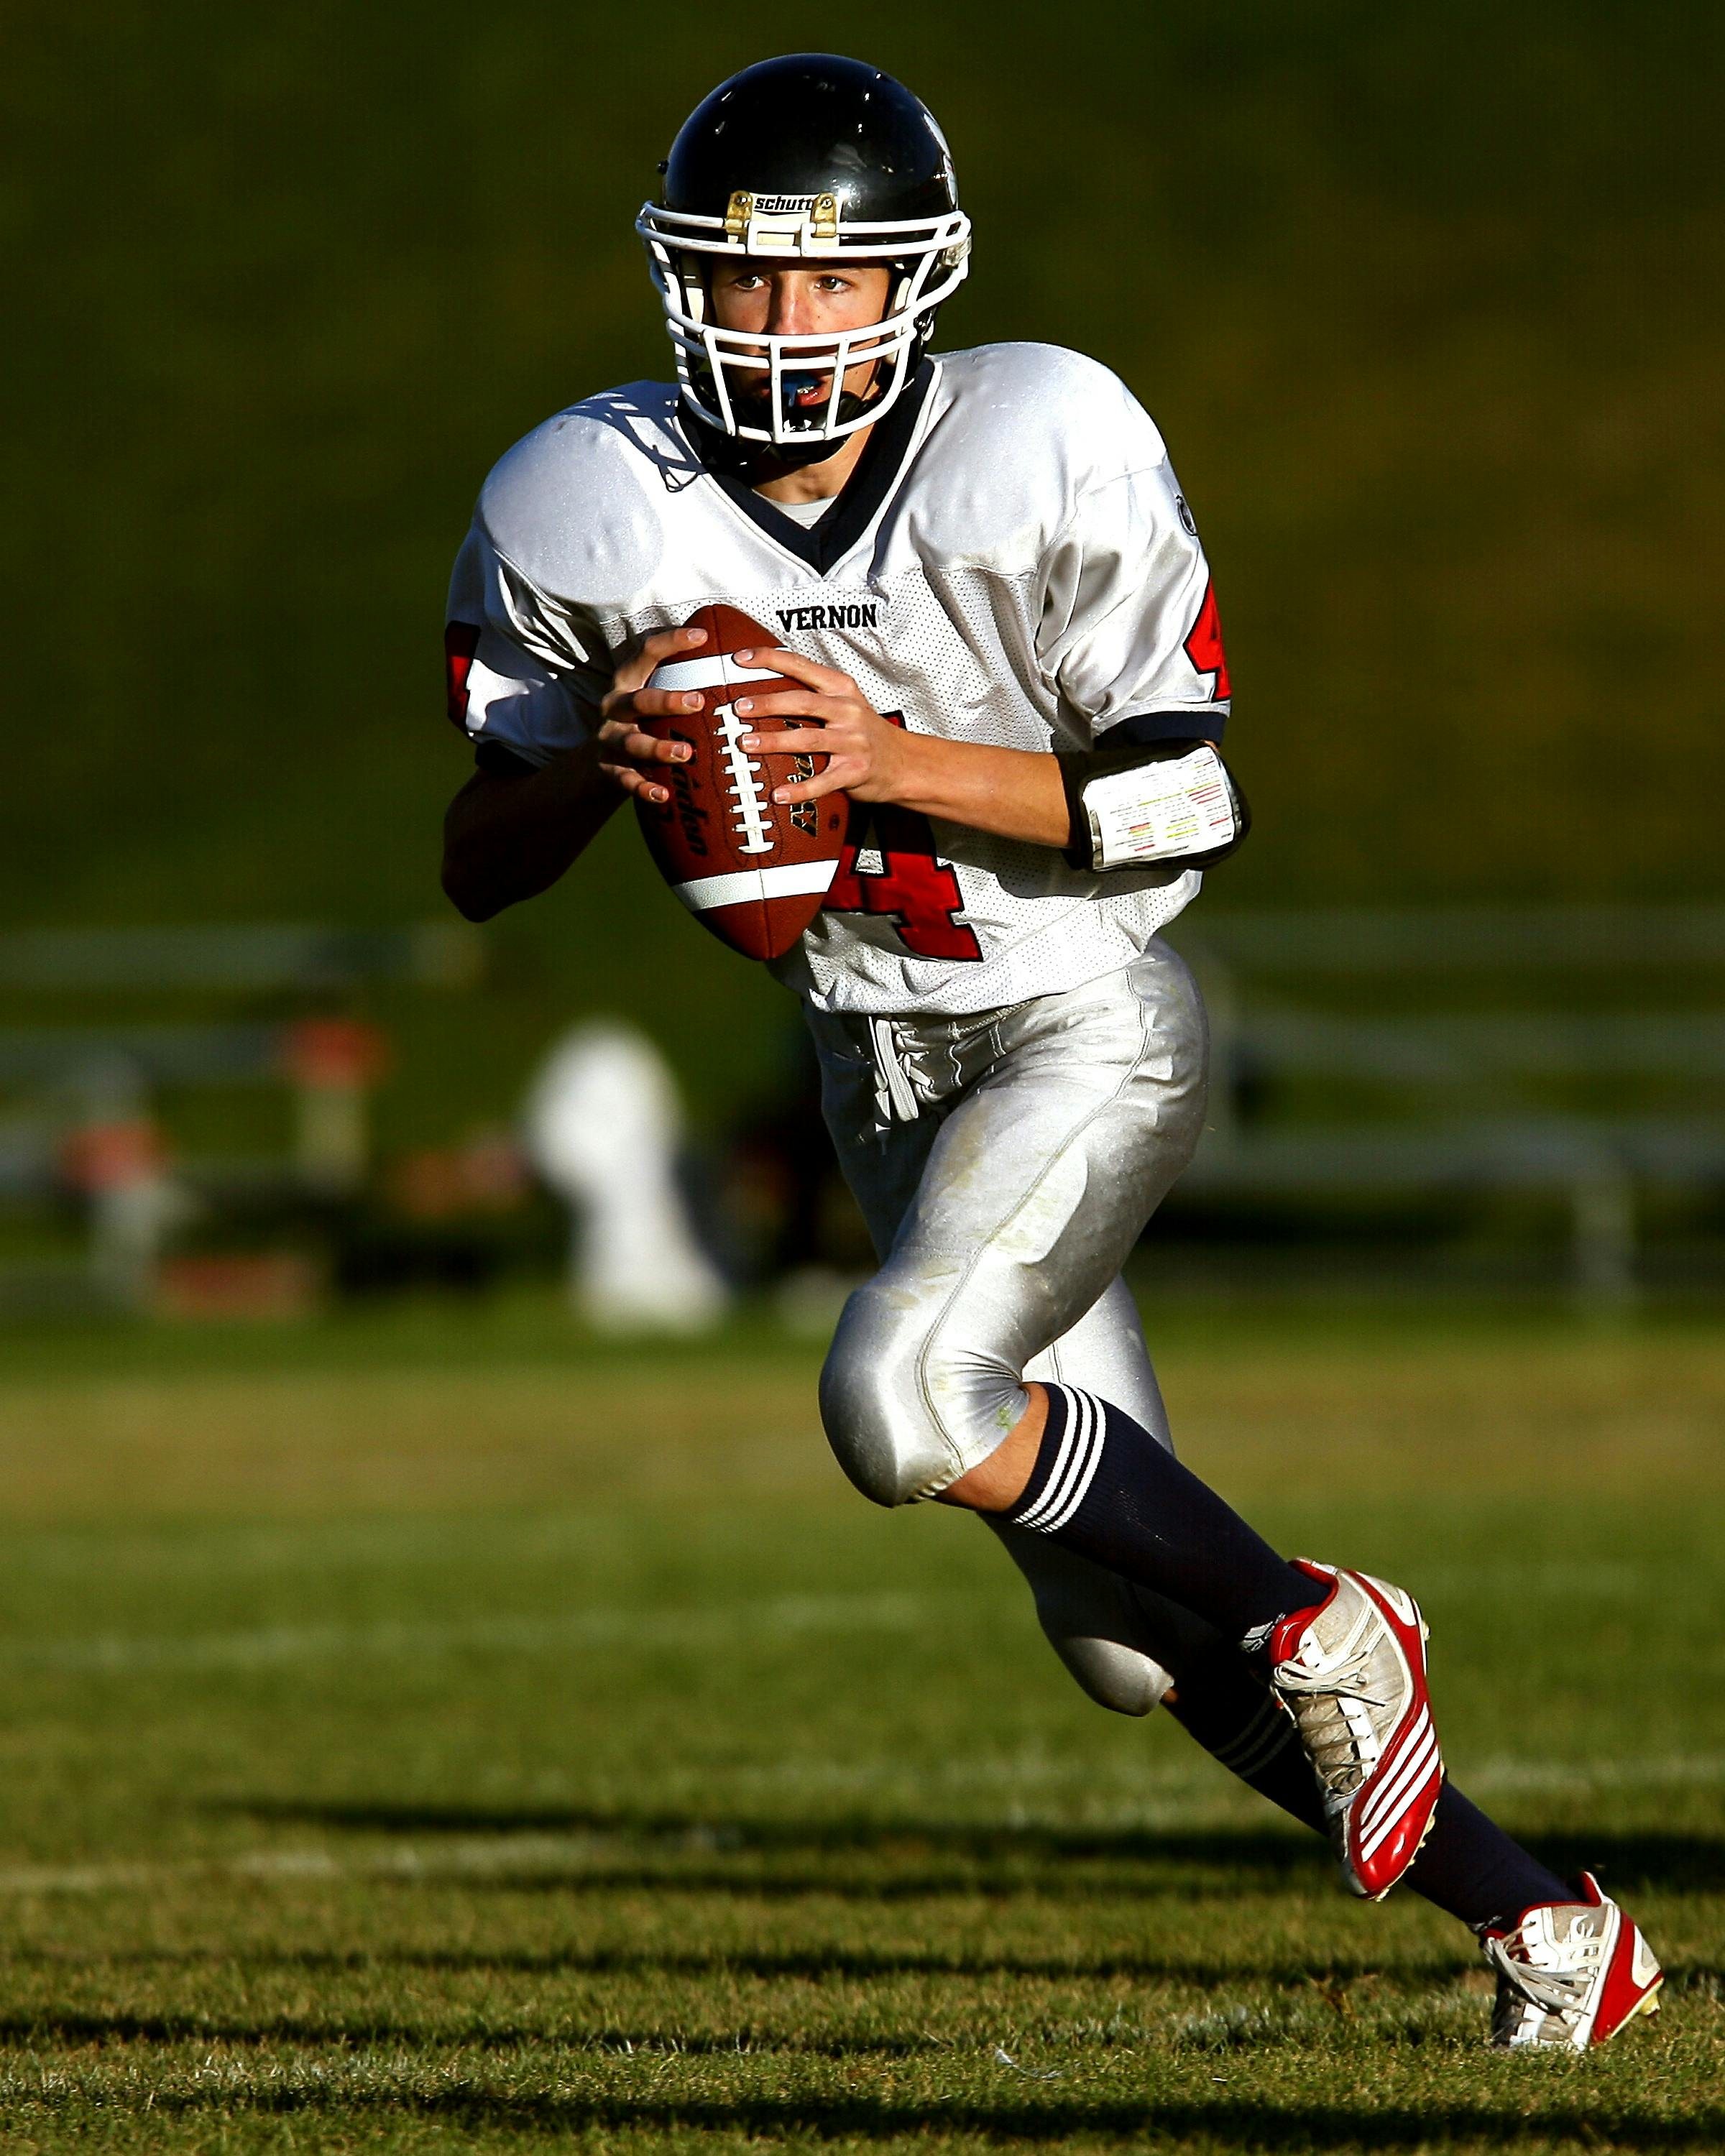 boy playing american football